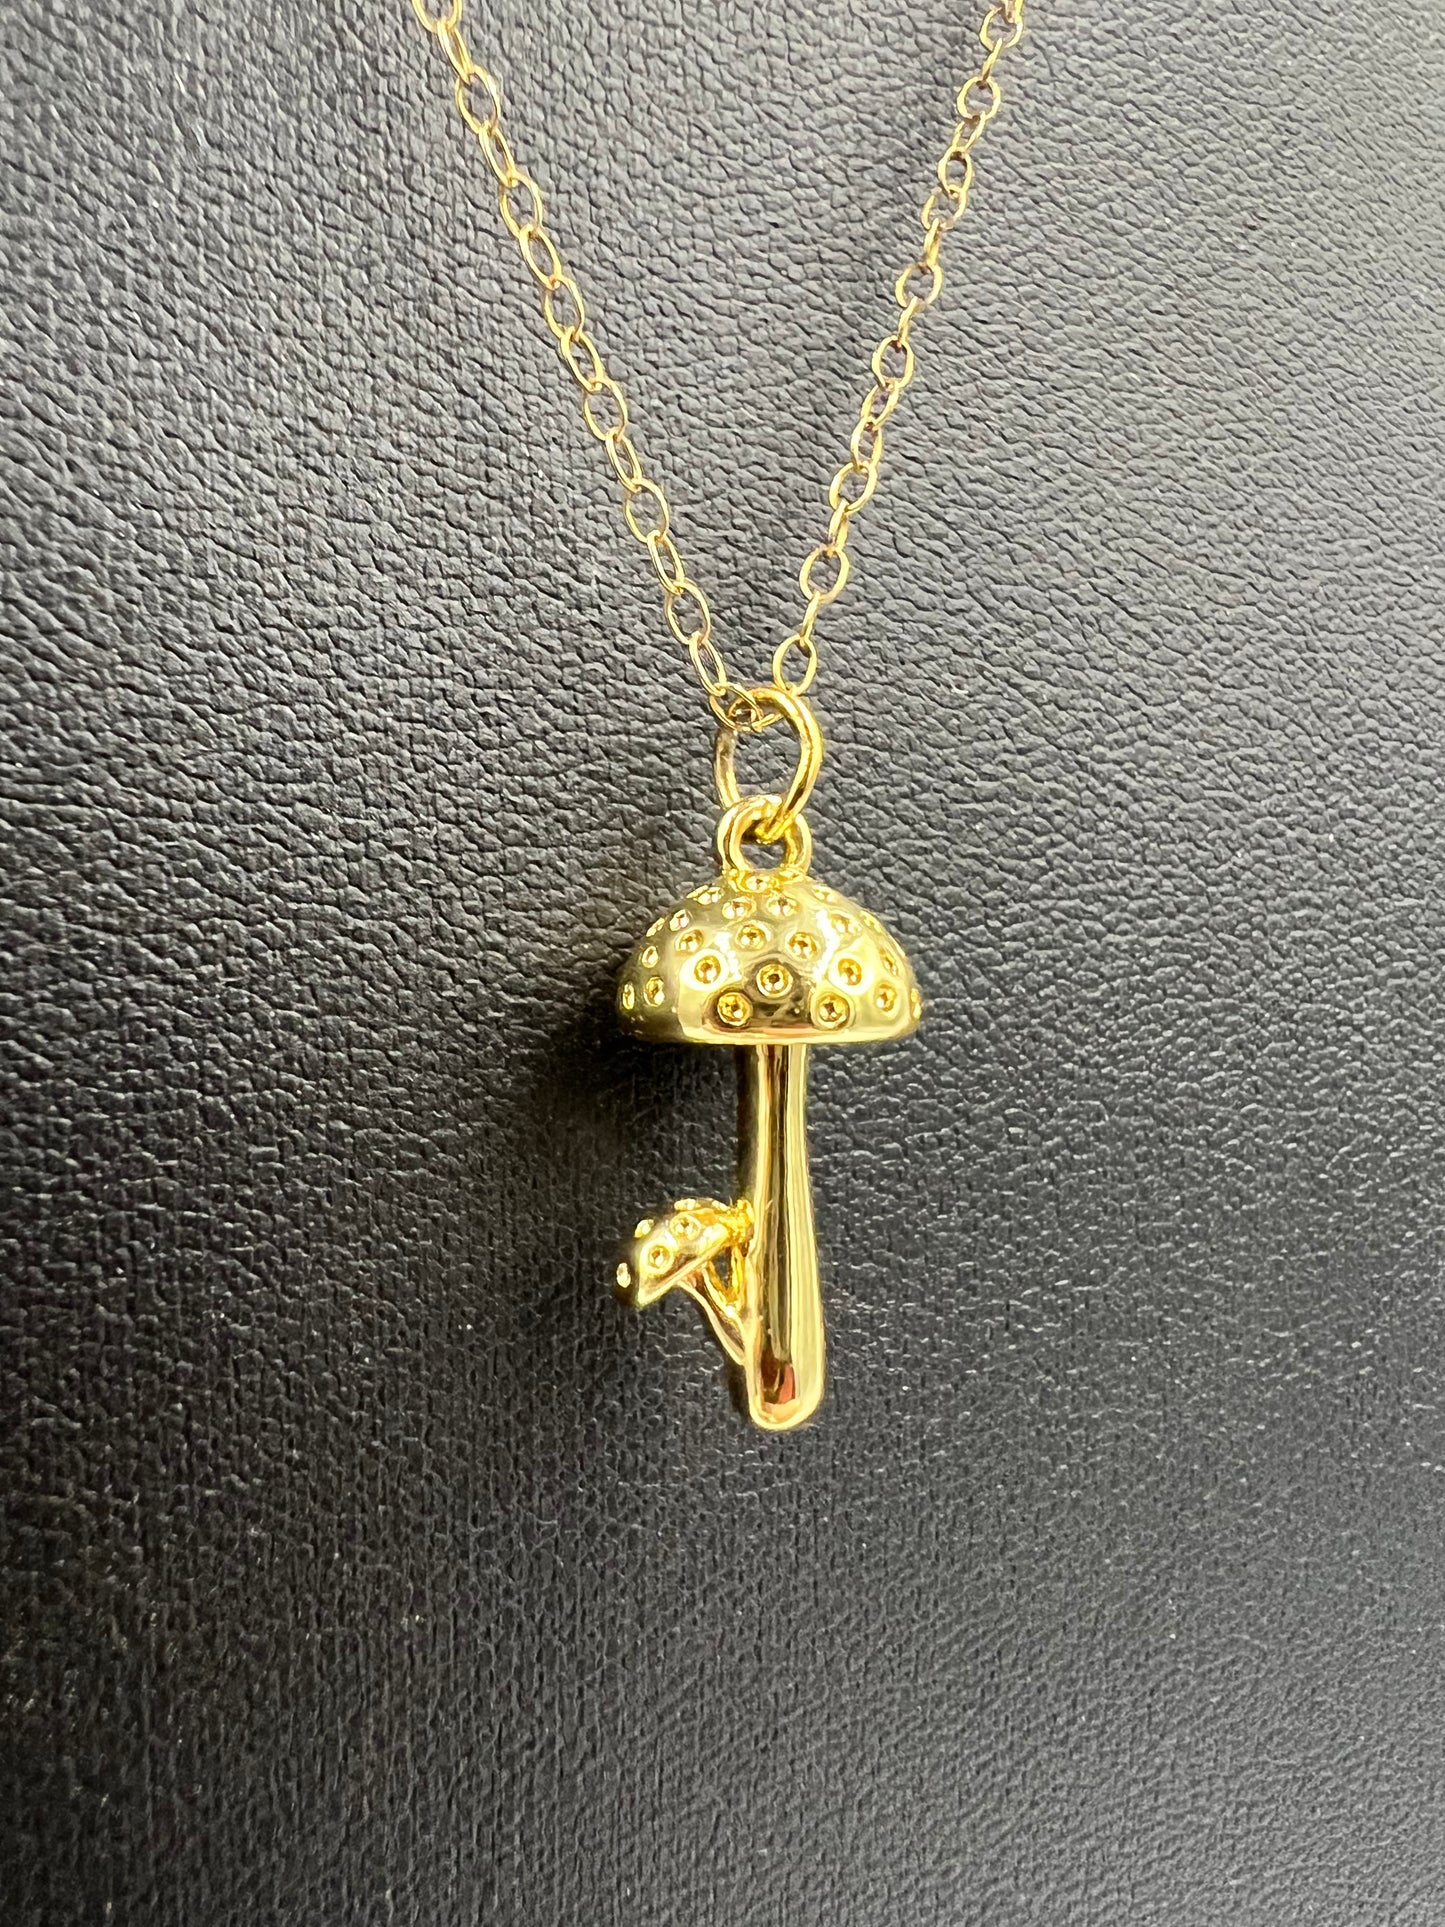 Sparkle Motion: Gold filled mushroom pendant